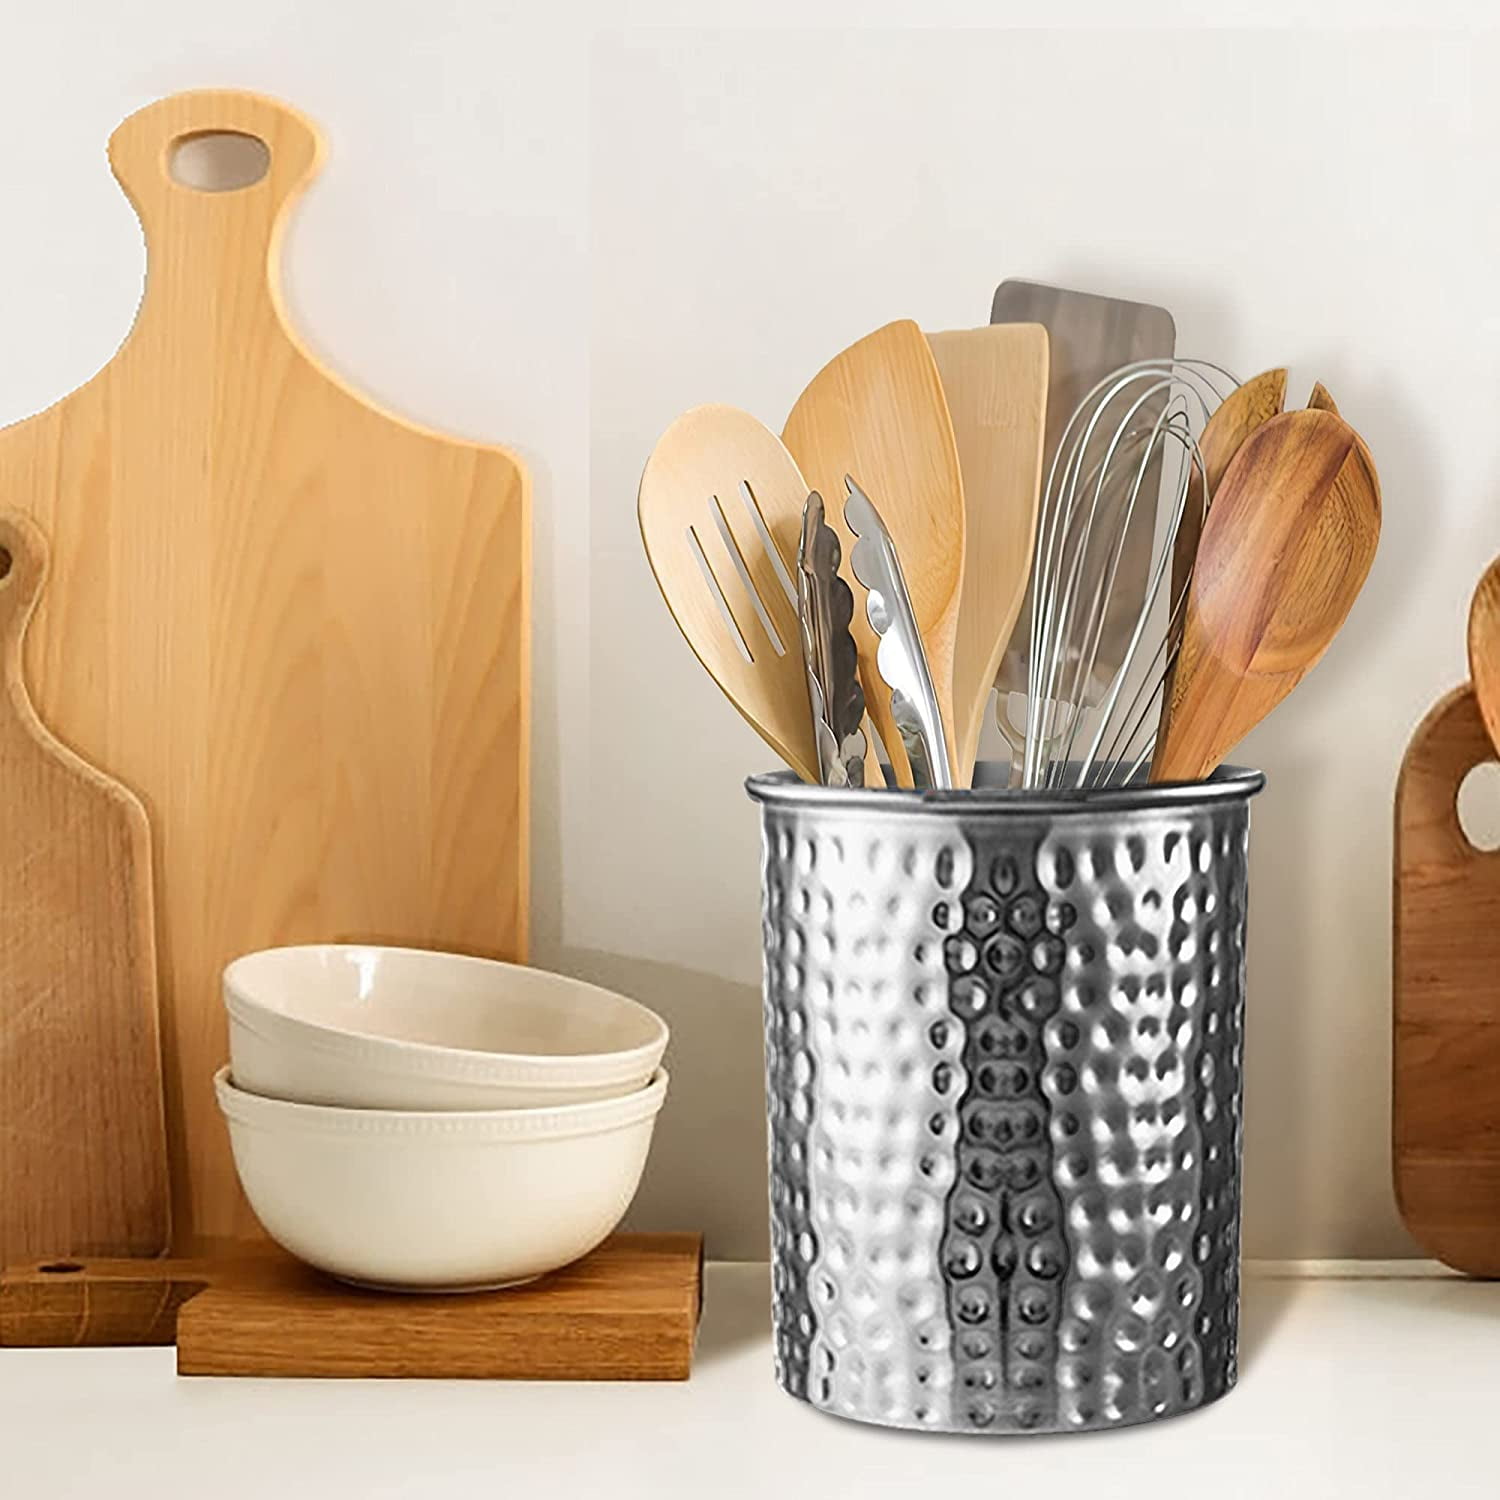 Kitchen Kit Housewares - Interior Houseware Services